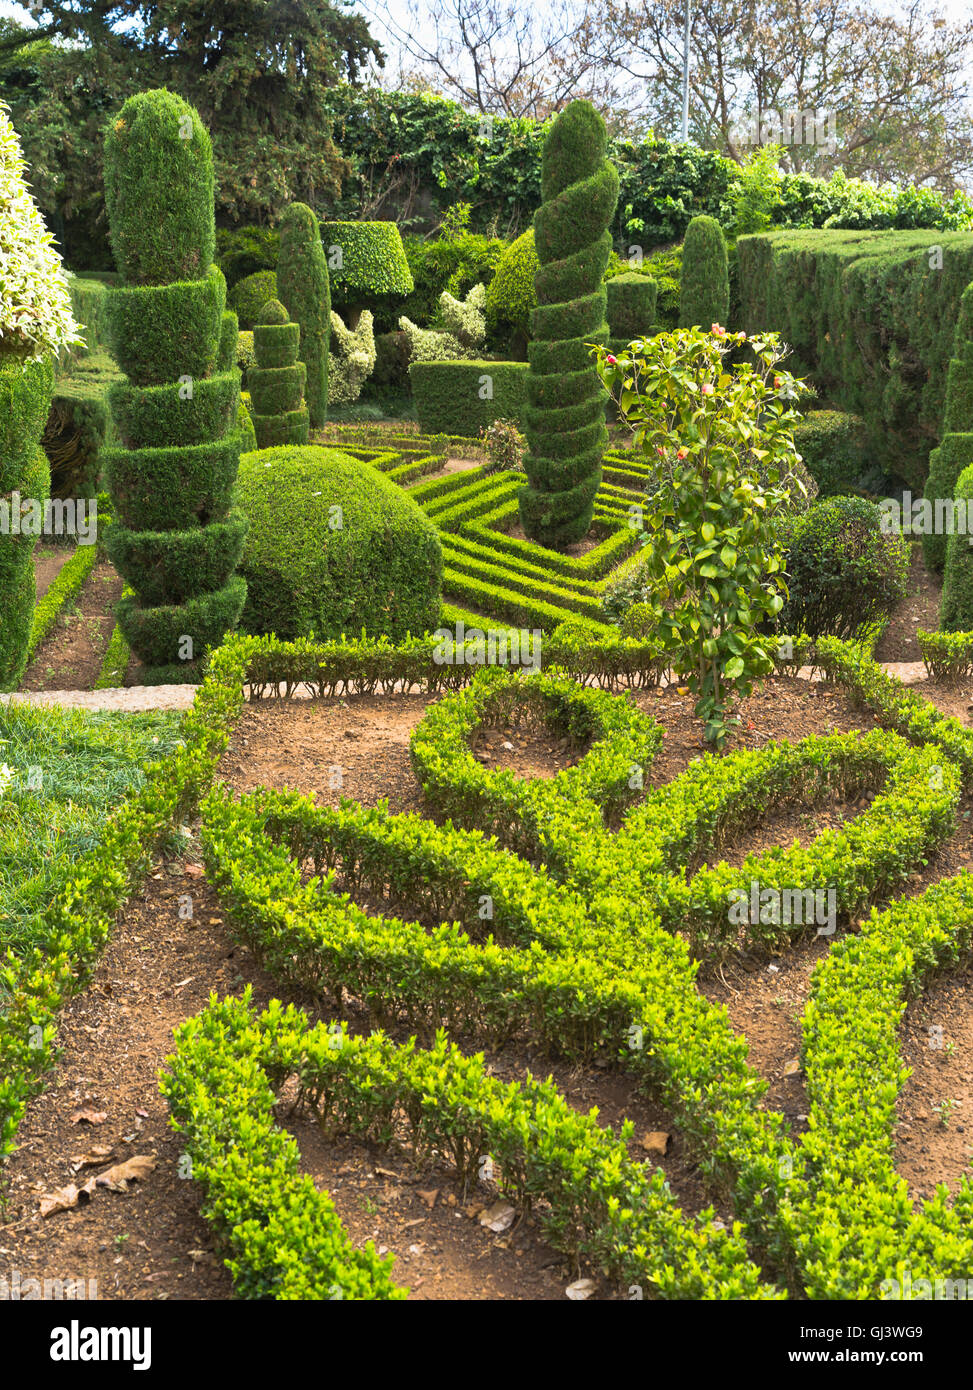 dh Botanical Gardens FUNCHAL MADEIRA Topiary designs trees hedges shrub garden design Stock Photo